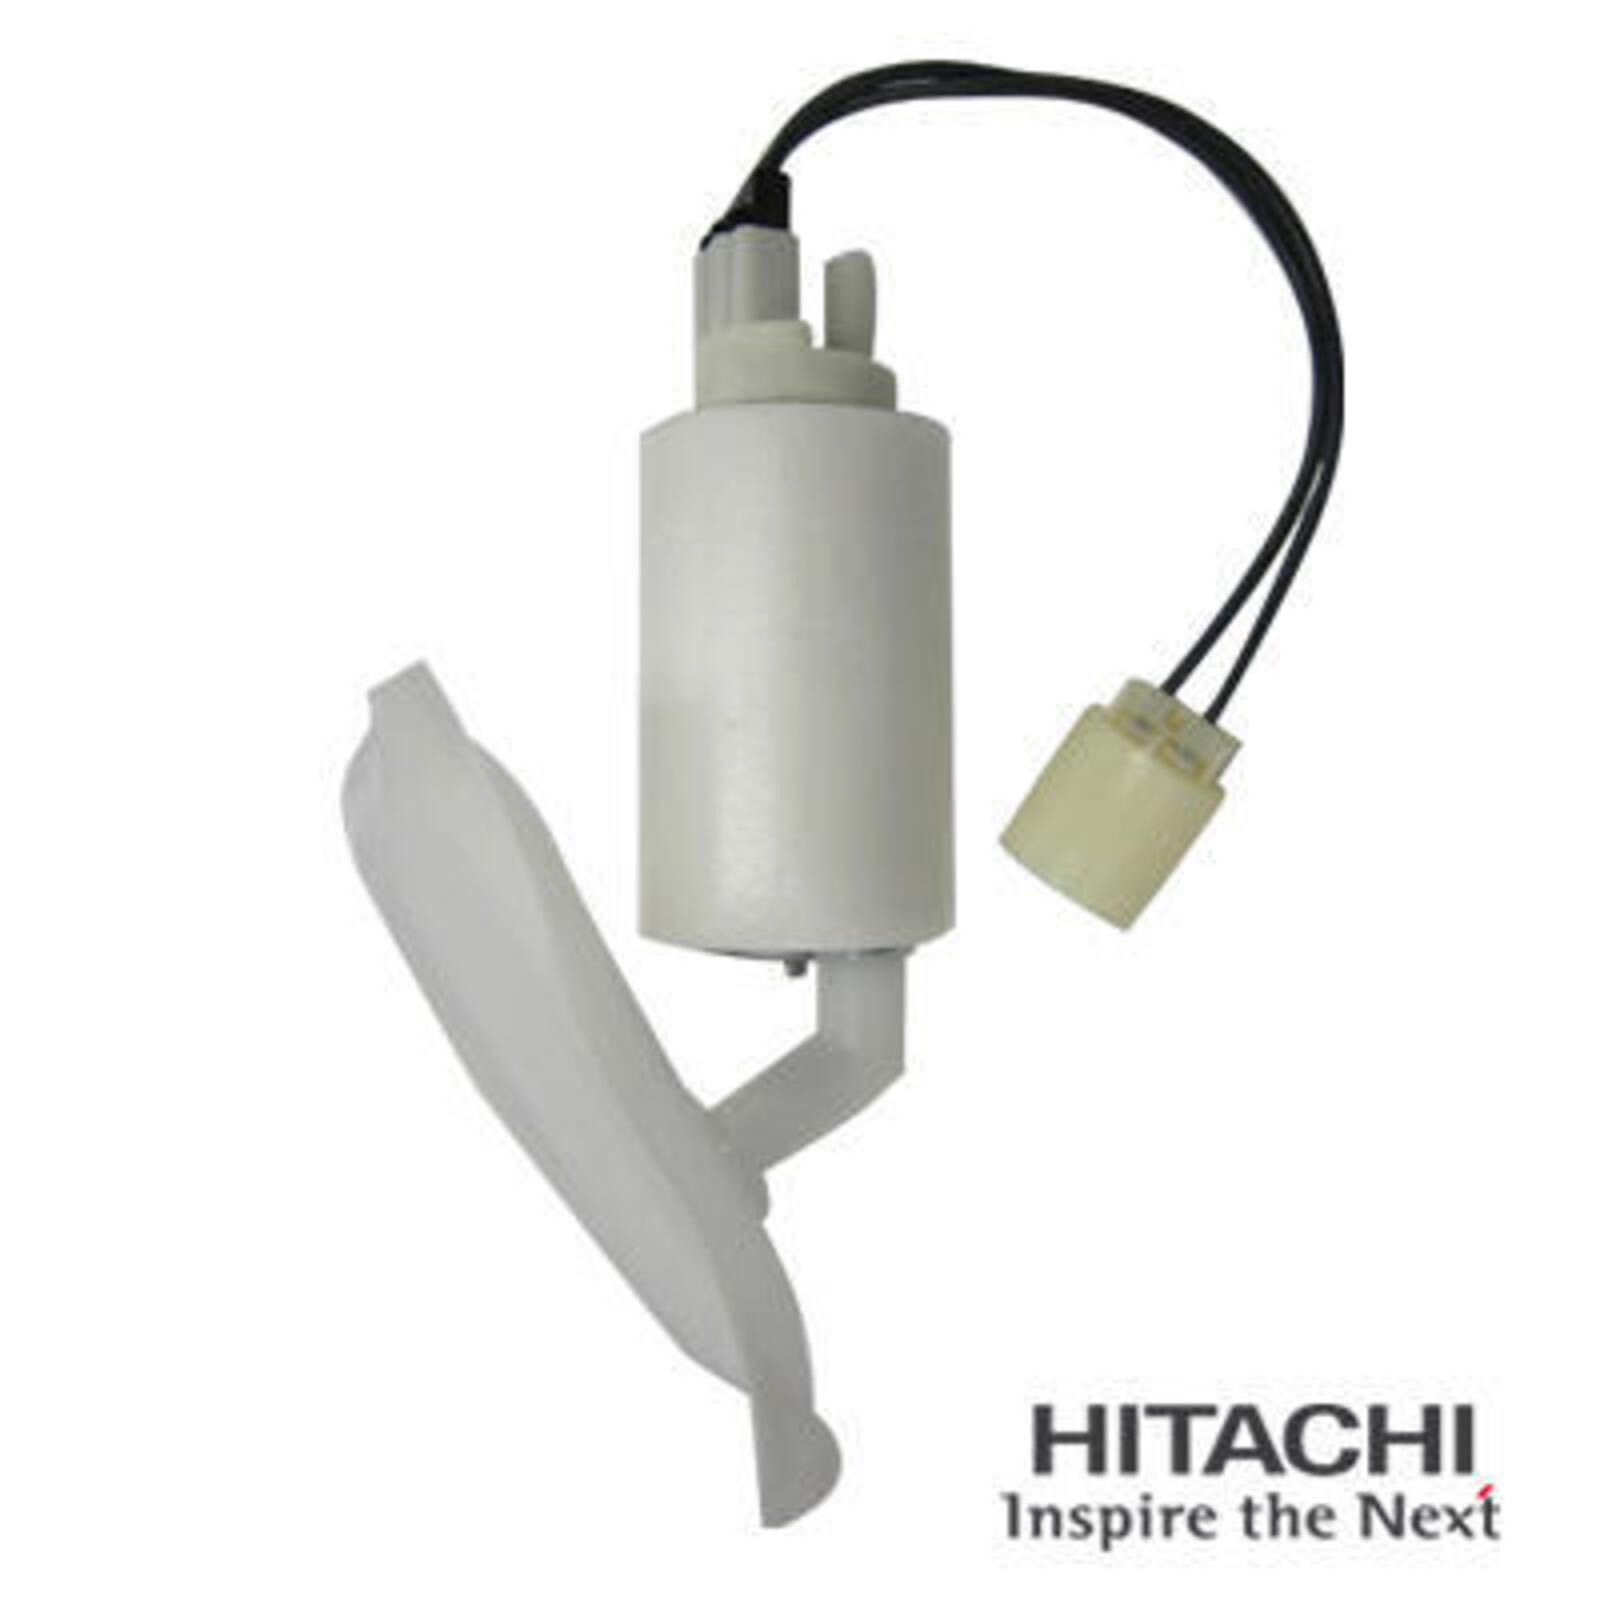 HITACHI Fuel Pump Original Spare Part